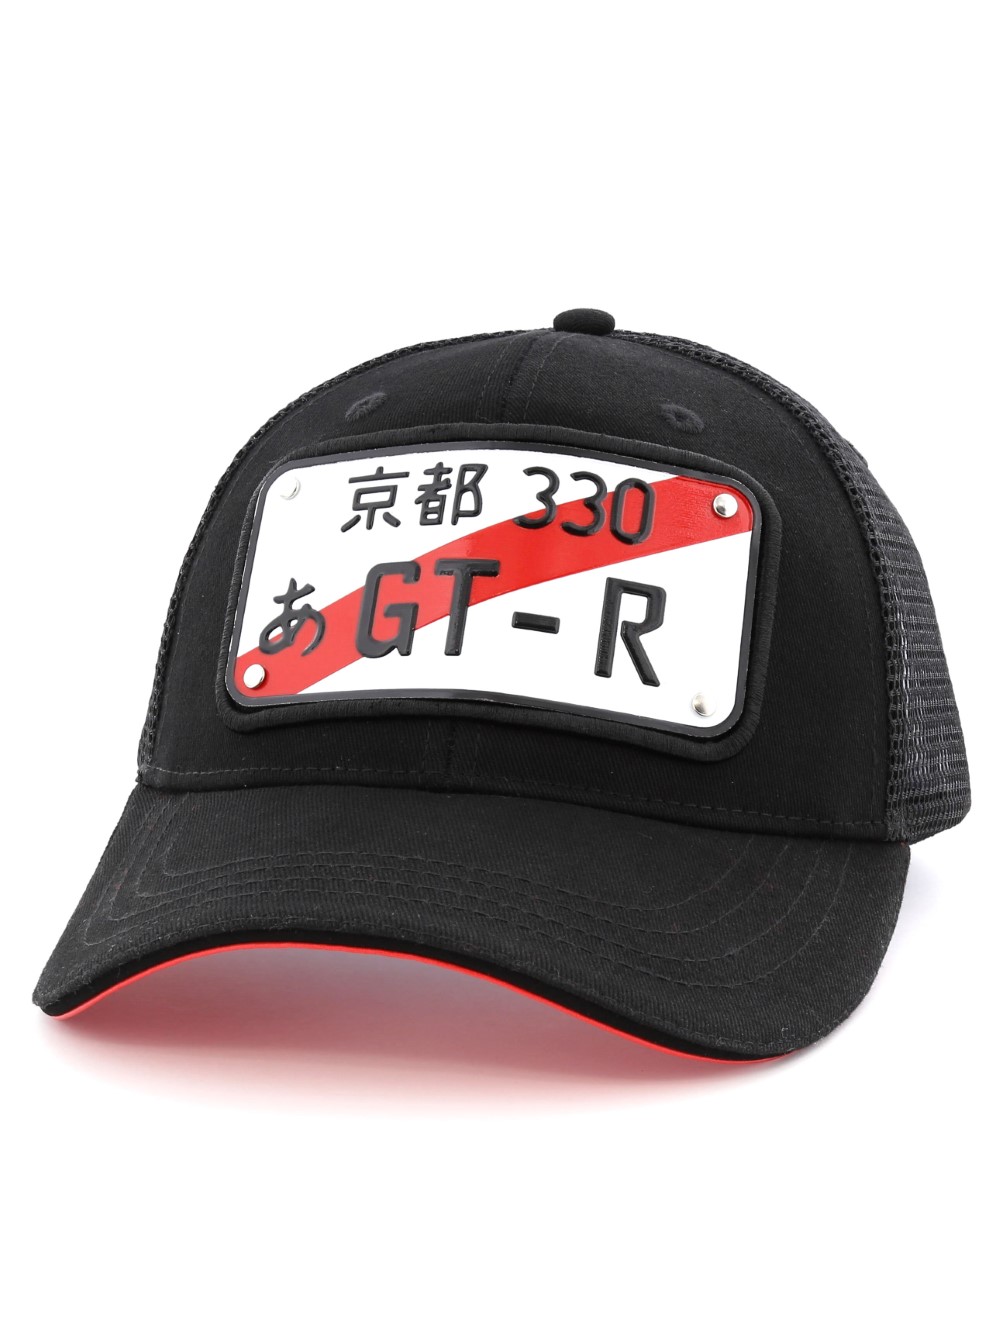 Raqam Japan Plate No Gtr Version 2 Unisex Trucker Cap Full Black/Red Rubber